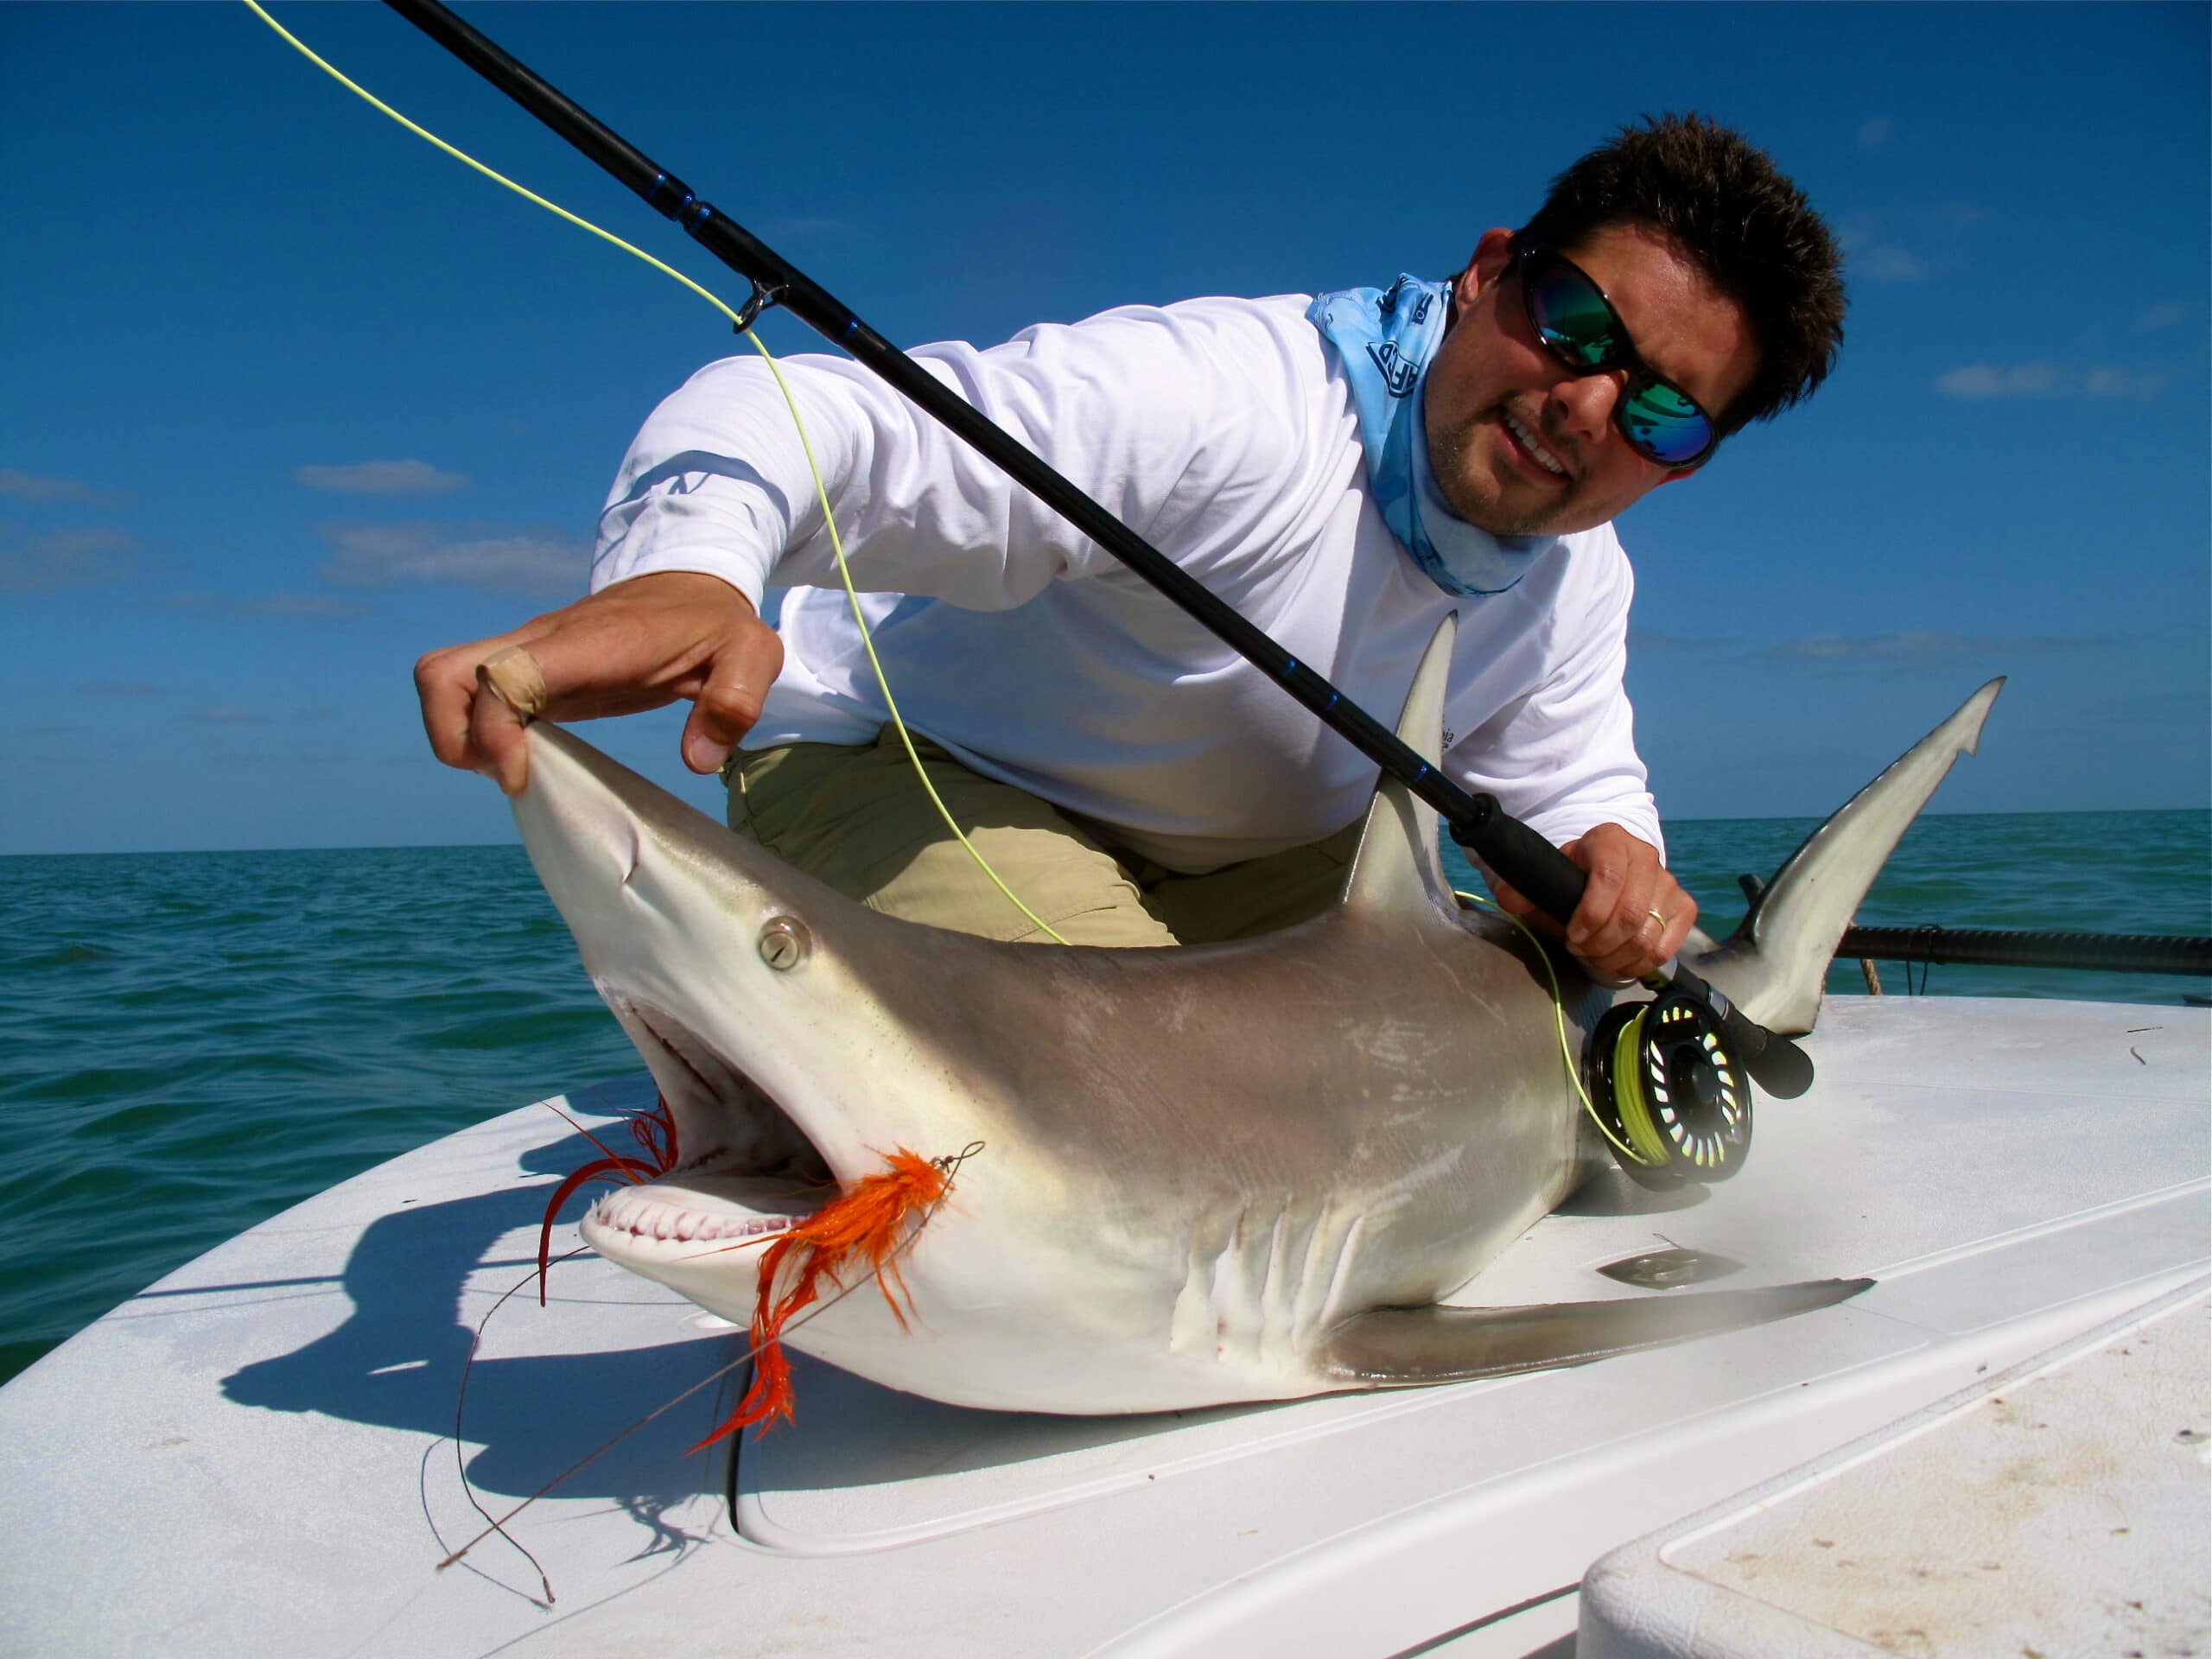 Shark Fishing - Miami Flats Fishing Guide Miami, FL - Shallow Tails